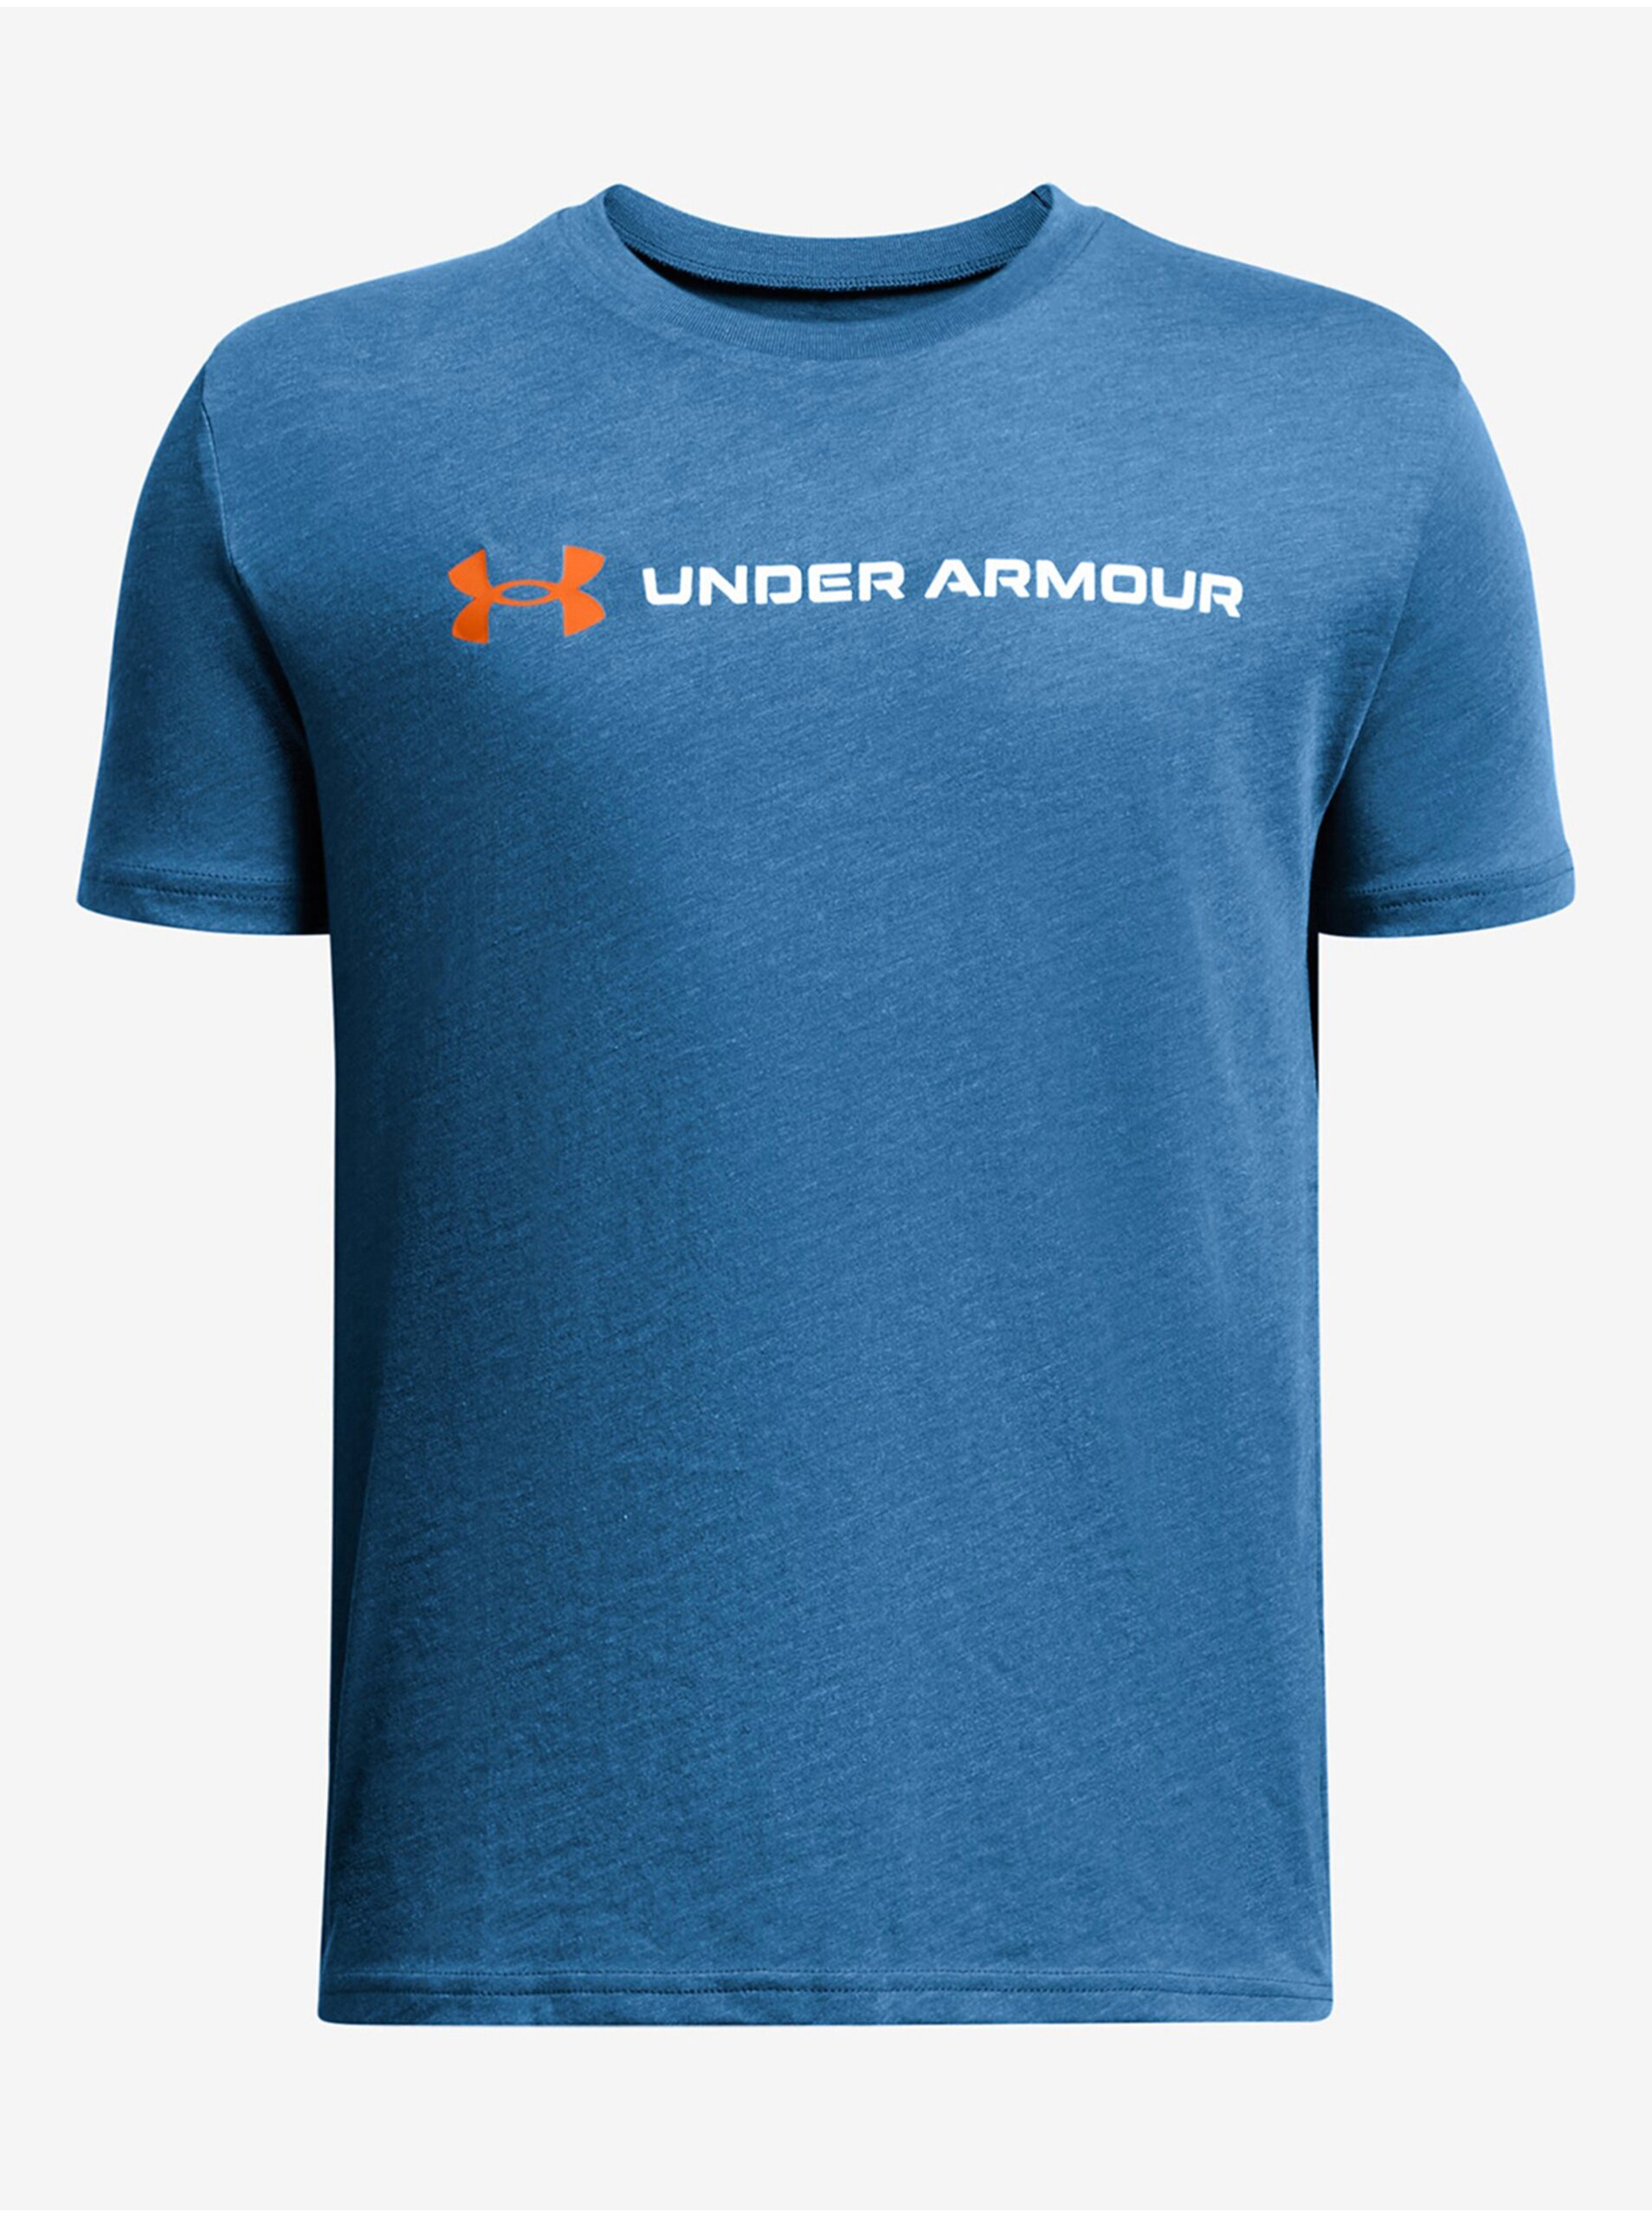 Lacno Modré chlapčenské tričko Under Armour UA B LOGO WORDMARK SS